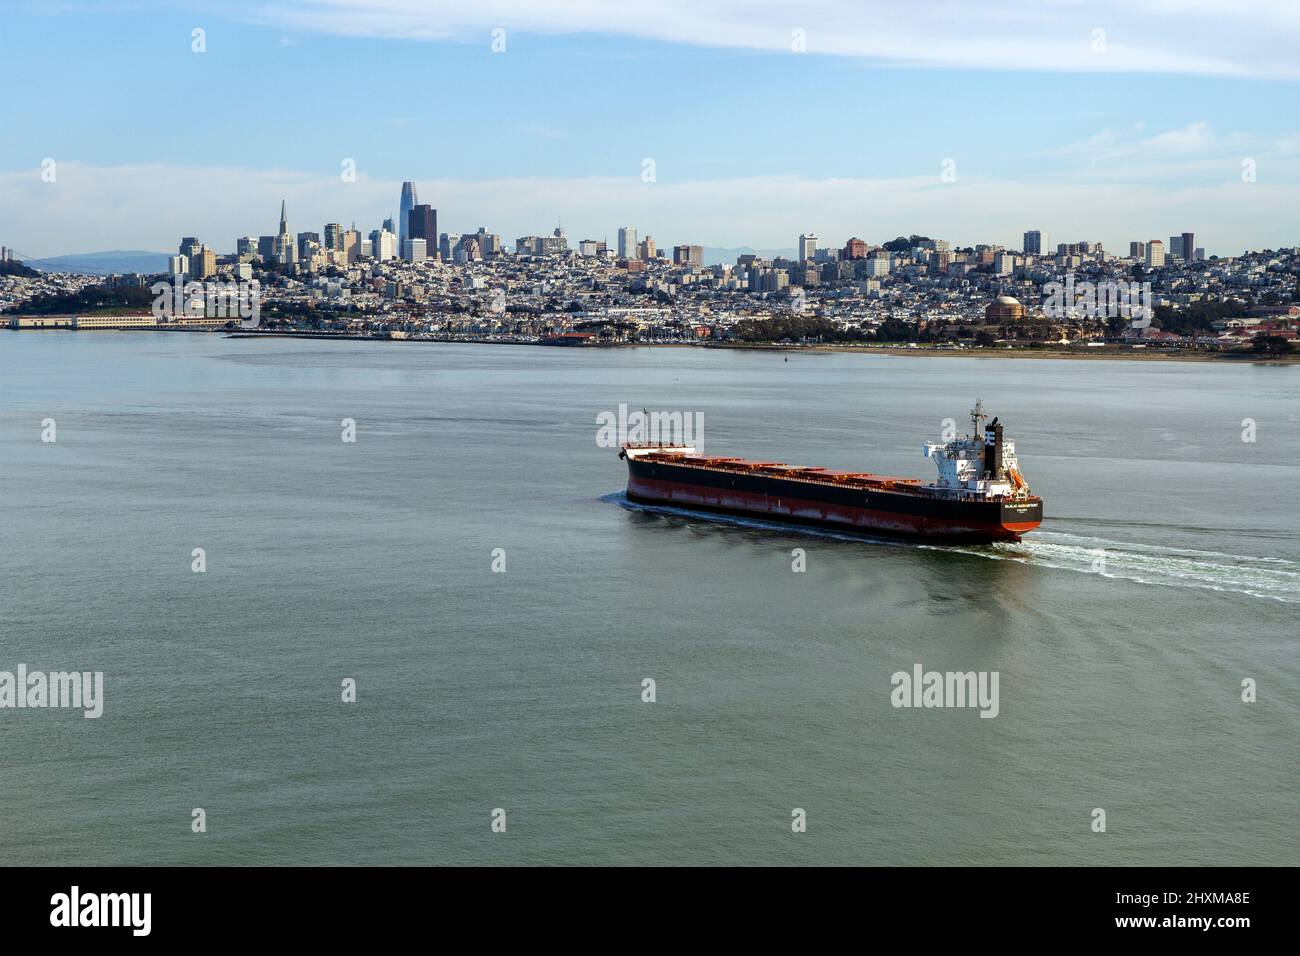 Fright ship in San Francisco Stock Photo